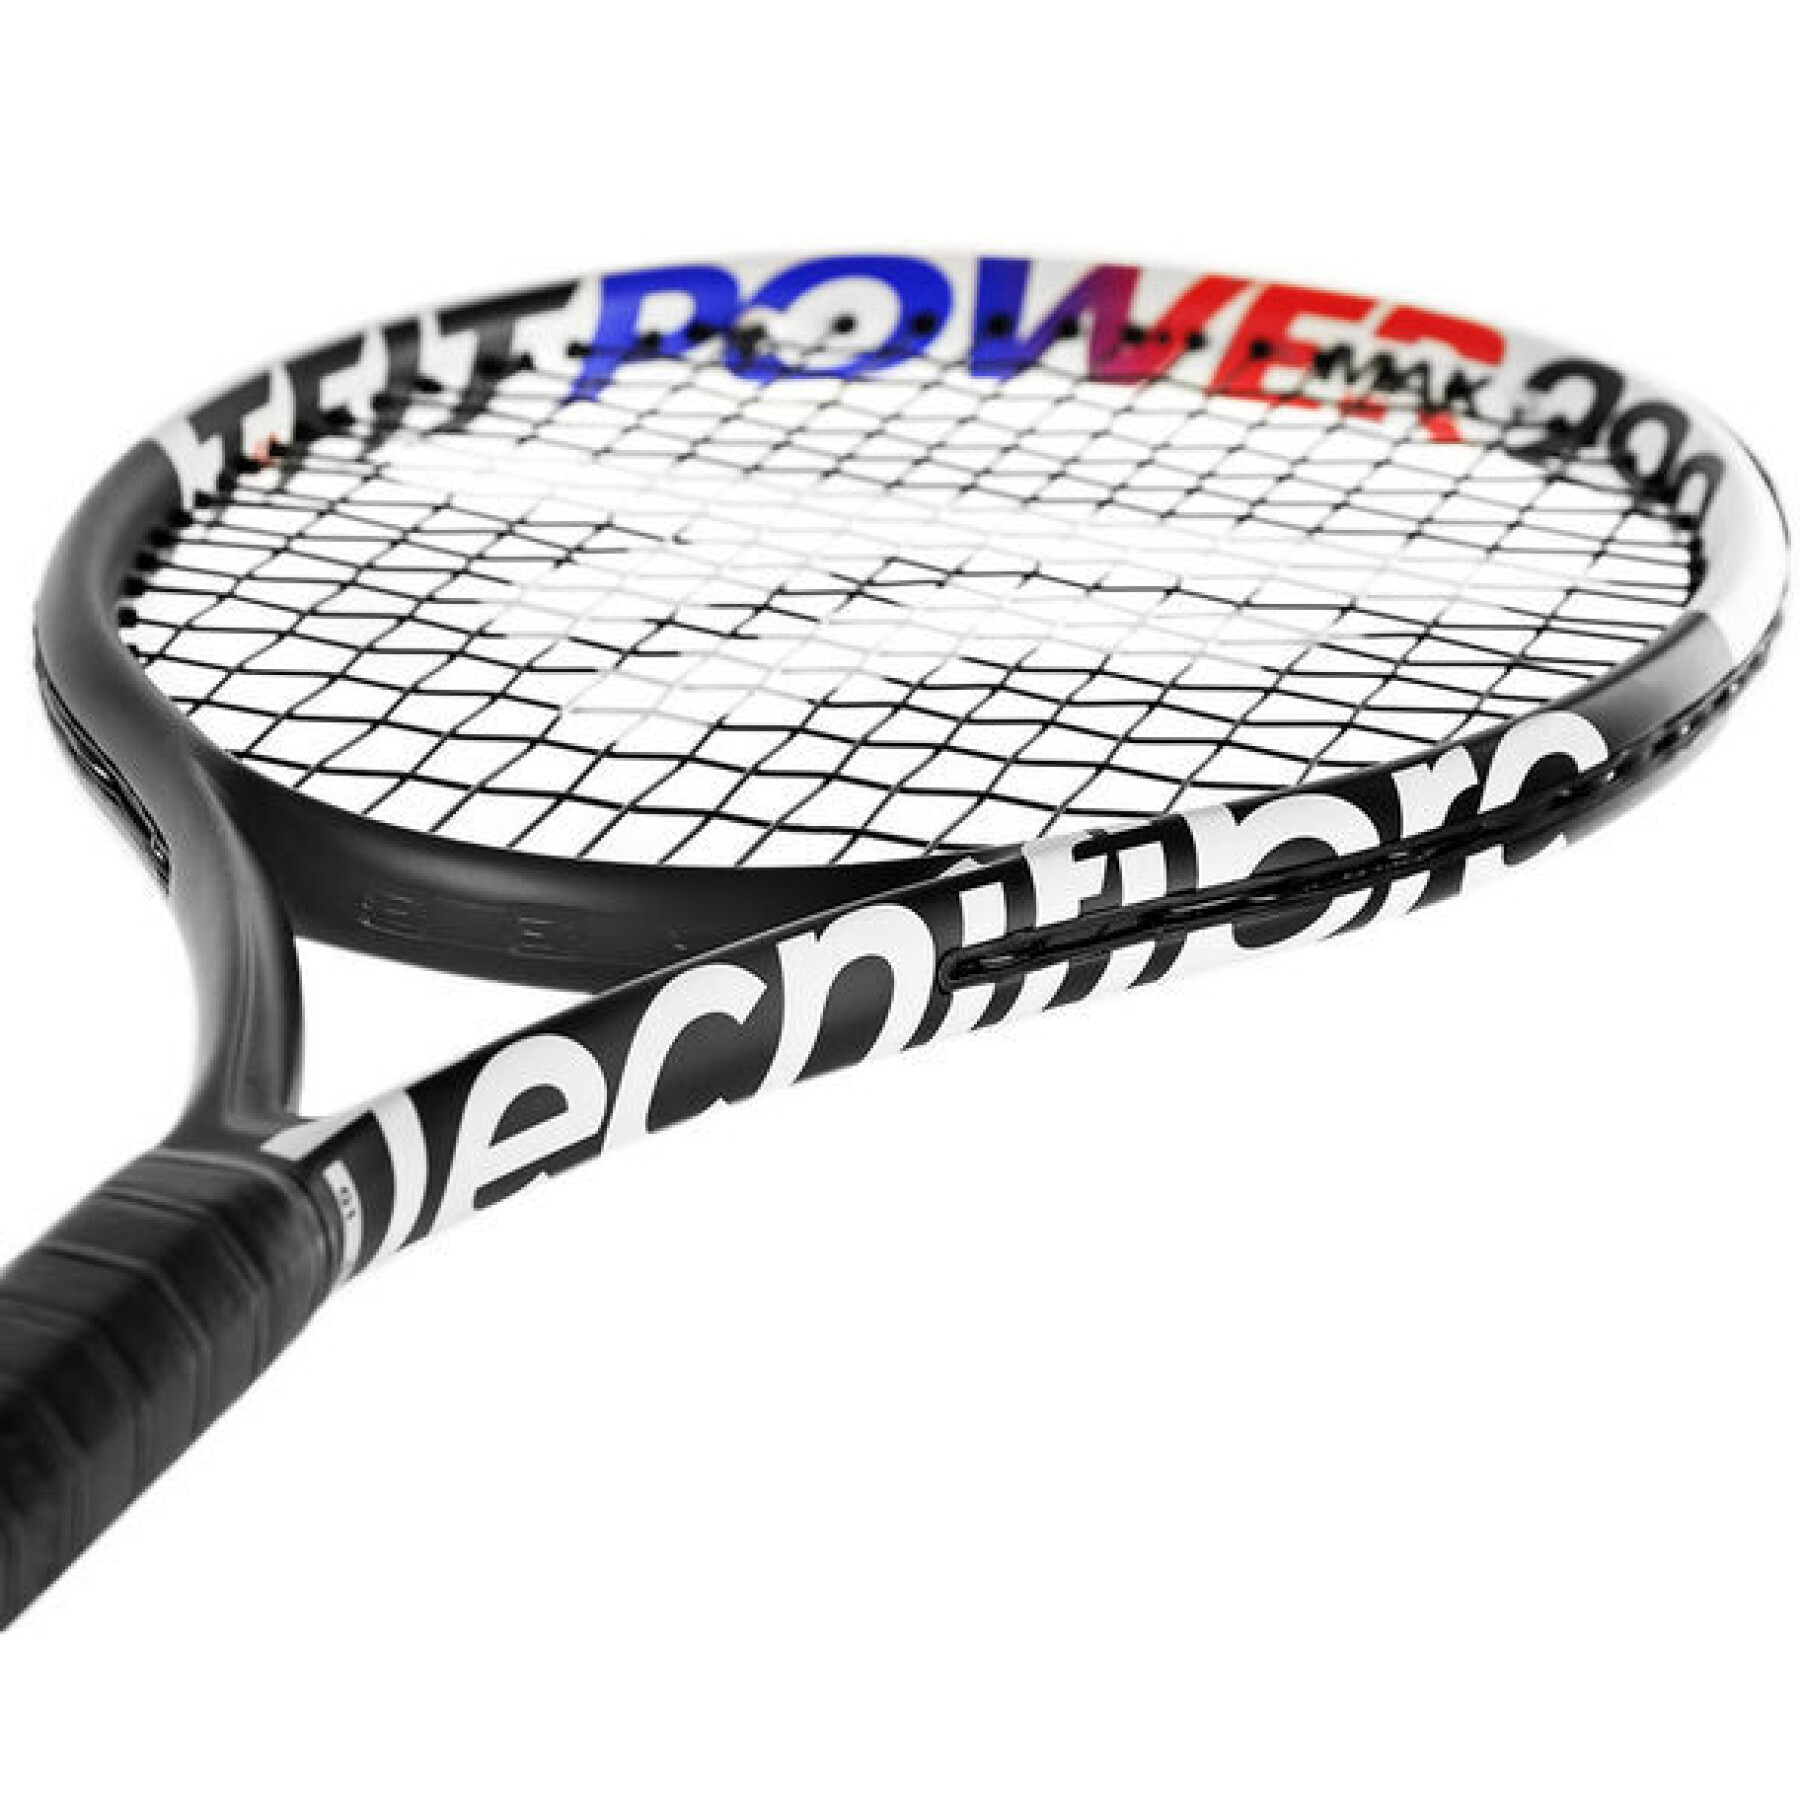 Raquette de tennis Tecnifibre TFIT 290 2023